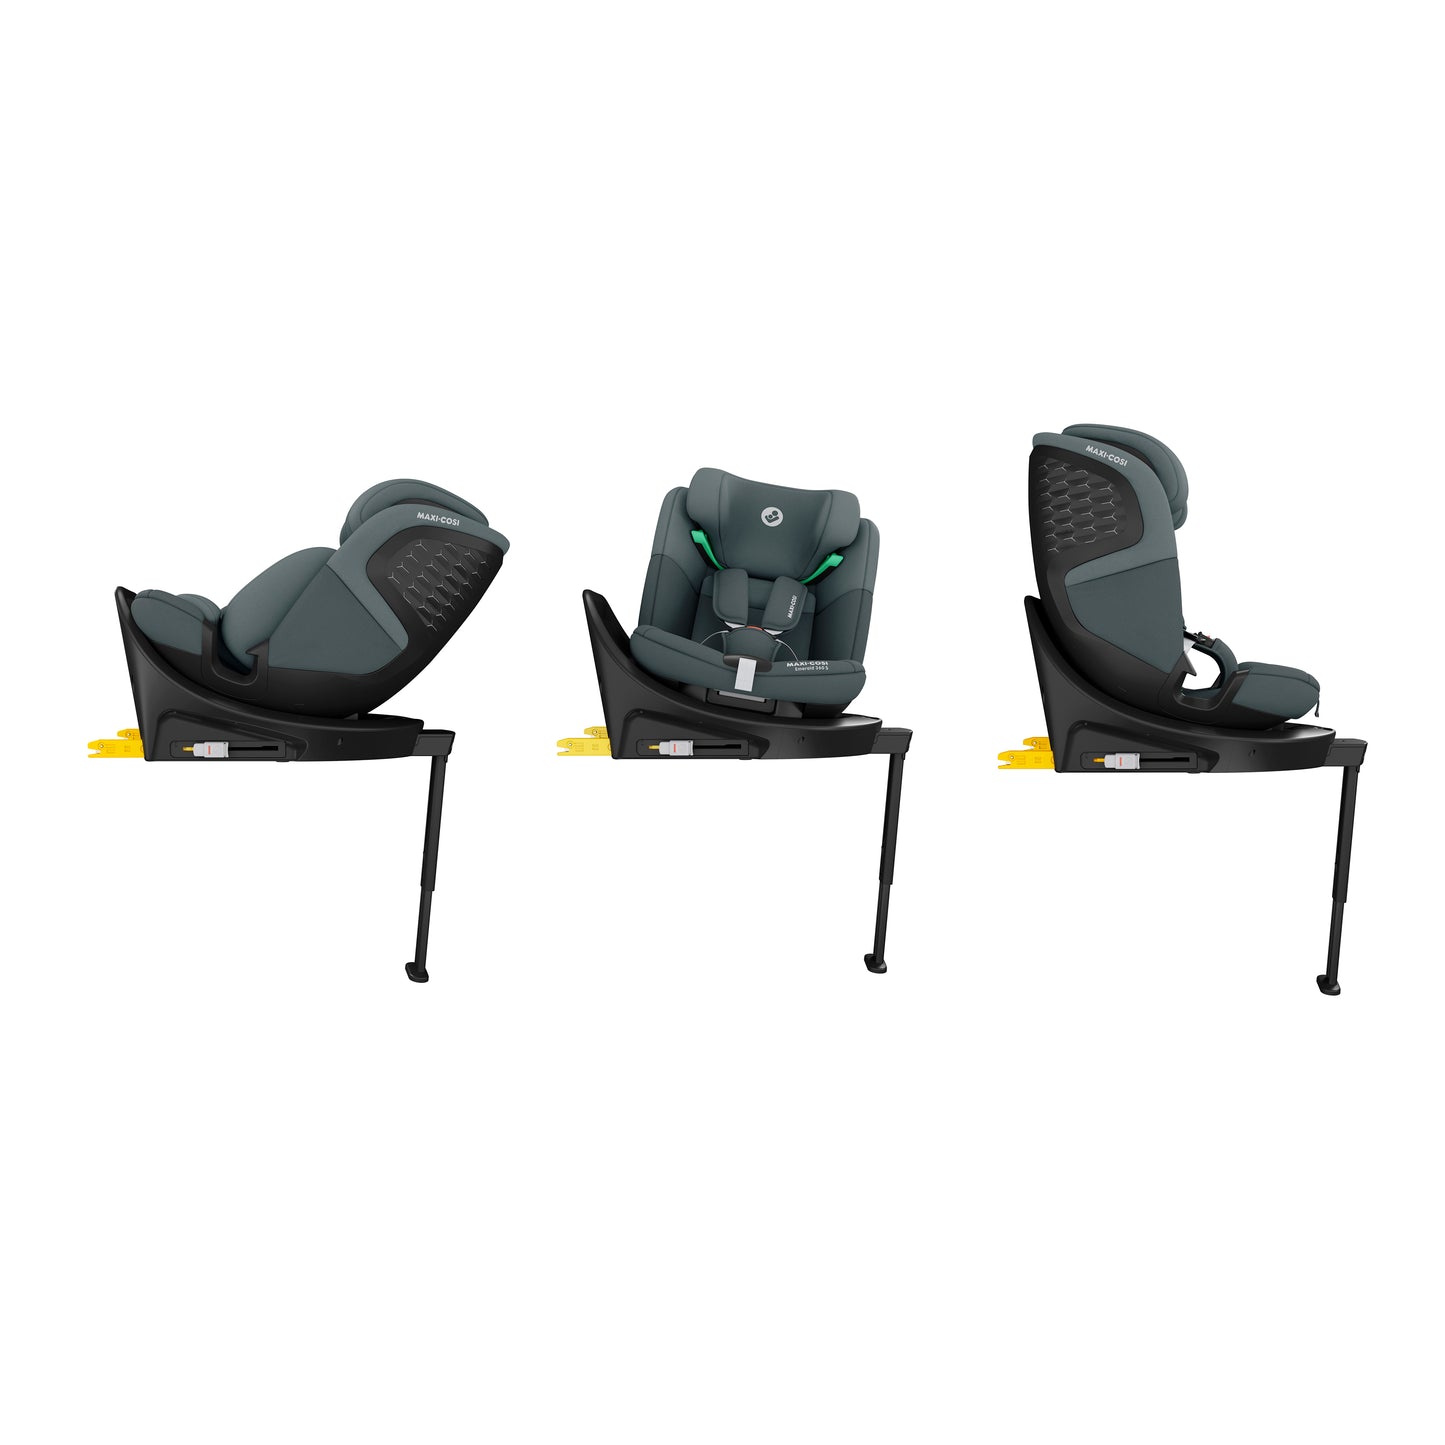 Maxi Cosi Emerald 360 S Car Seat | Tonal Graphite